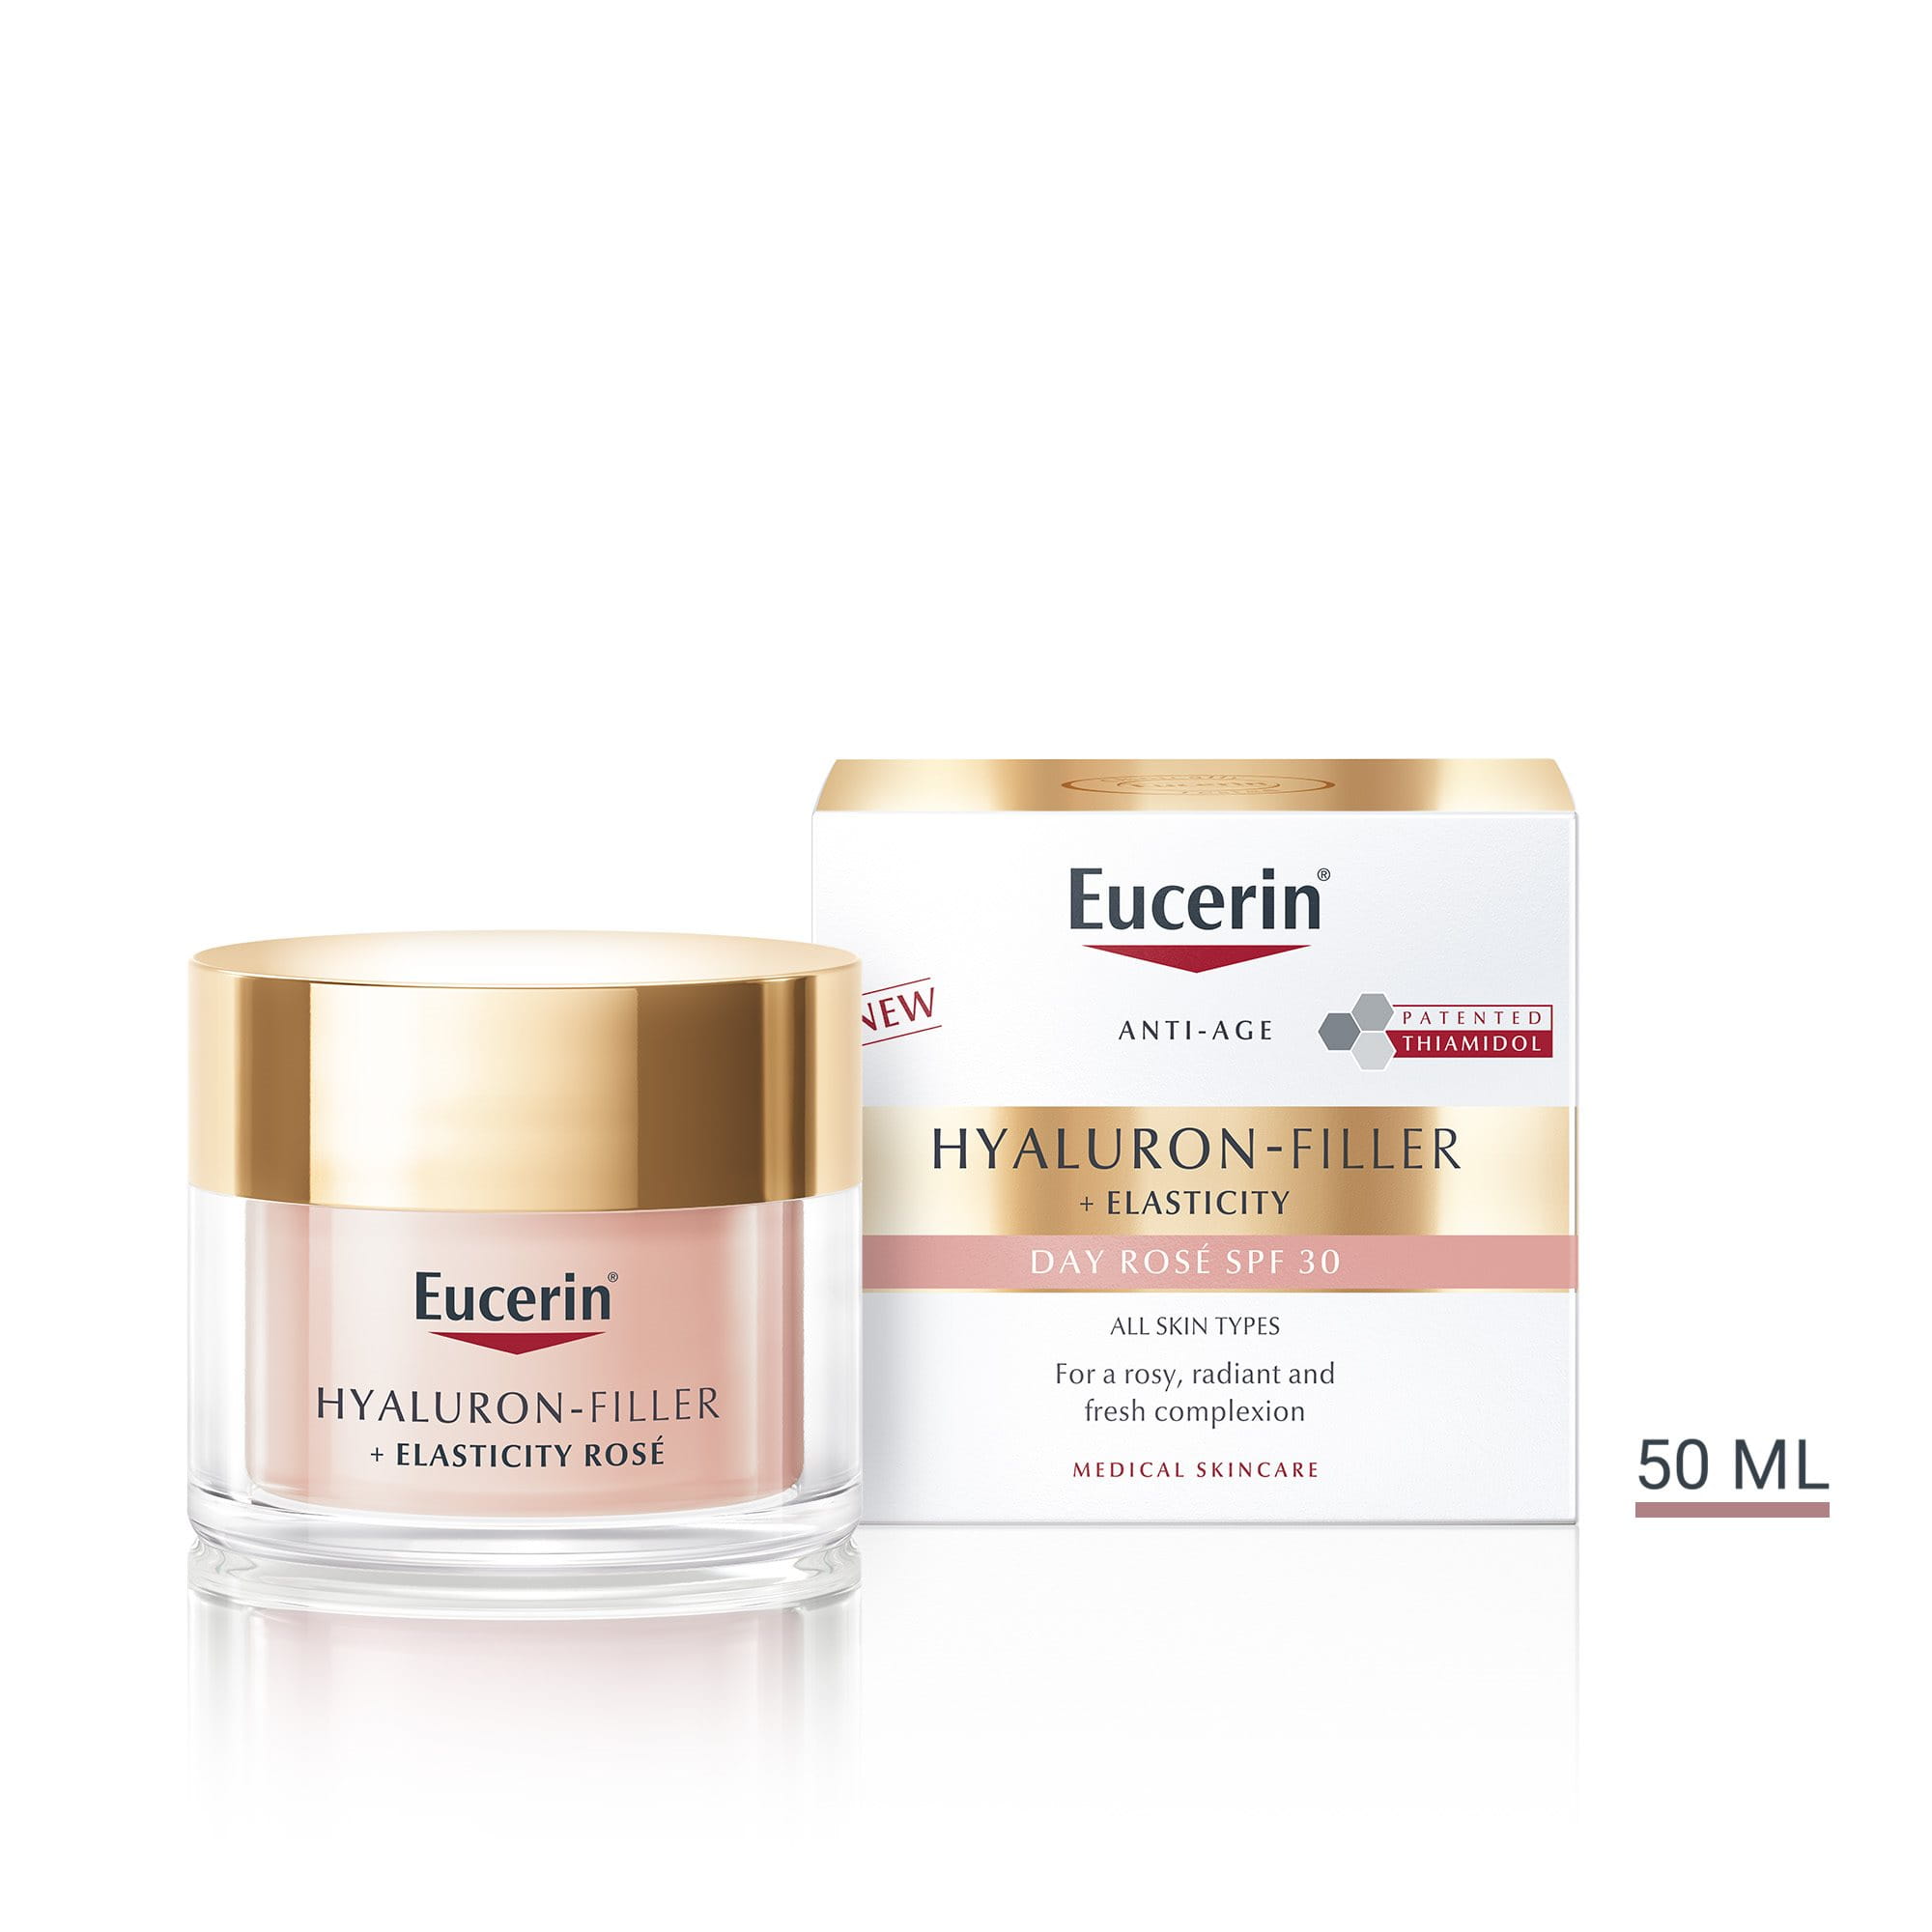 Eucerin Hyaluron-Filler + Elasticity Day Rosé Cream SPF30 dienas krēms ar patentētu tiamidolu